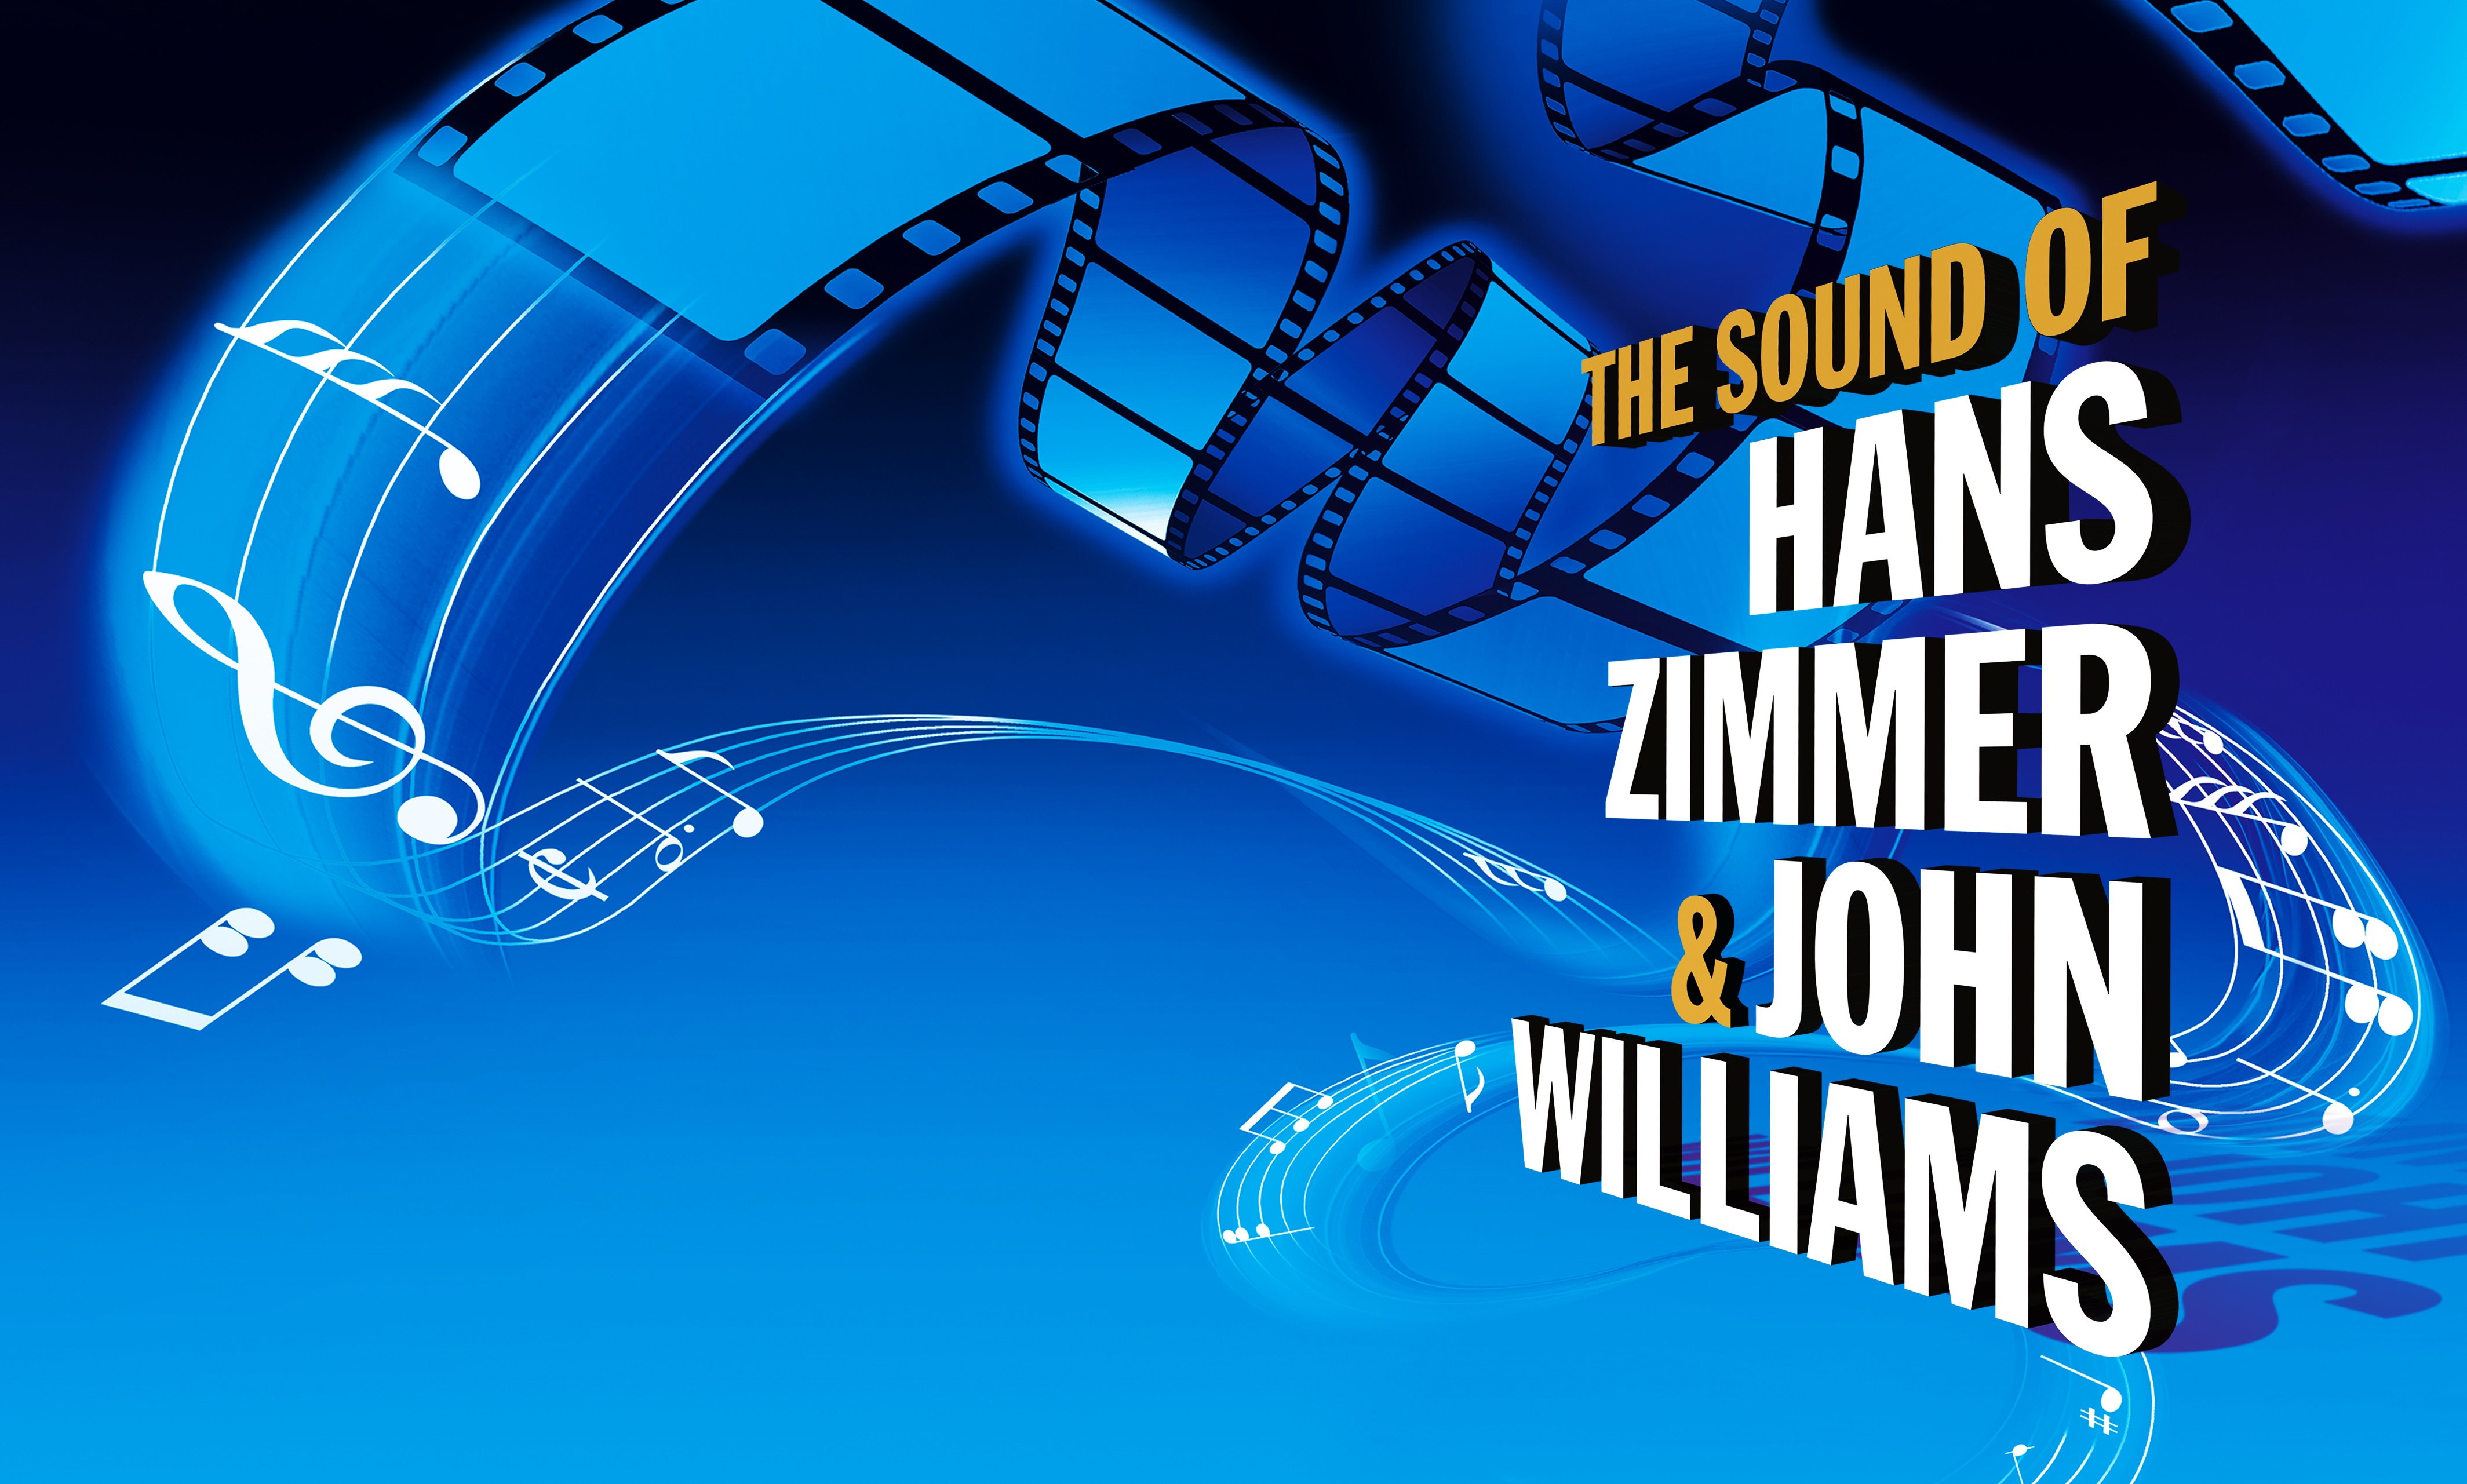 The Sound of Hans Zimmer & John Williams